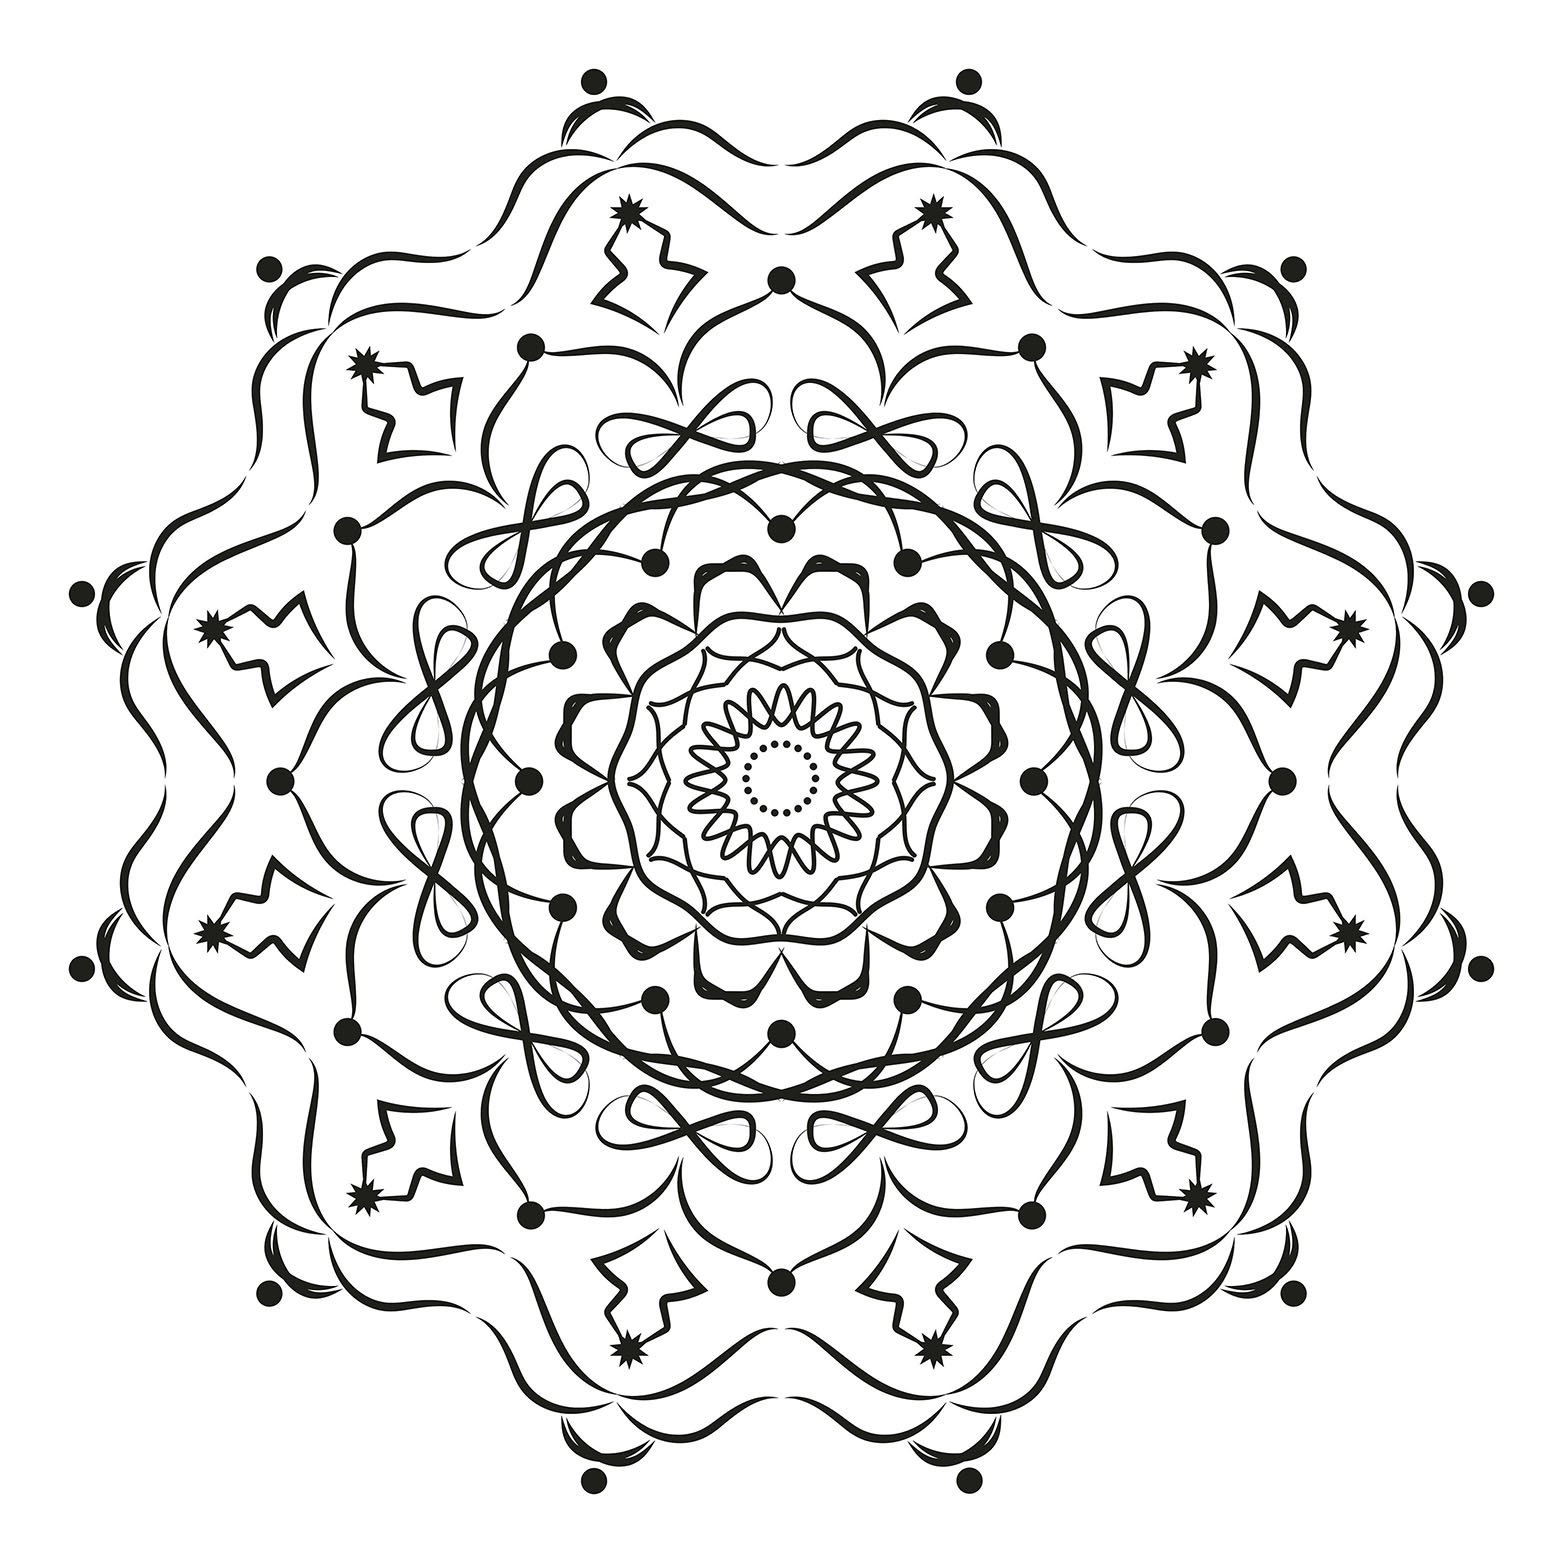 vector art work of mandala black and white pattern 1 3000x3000 px copy copy min 934